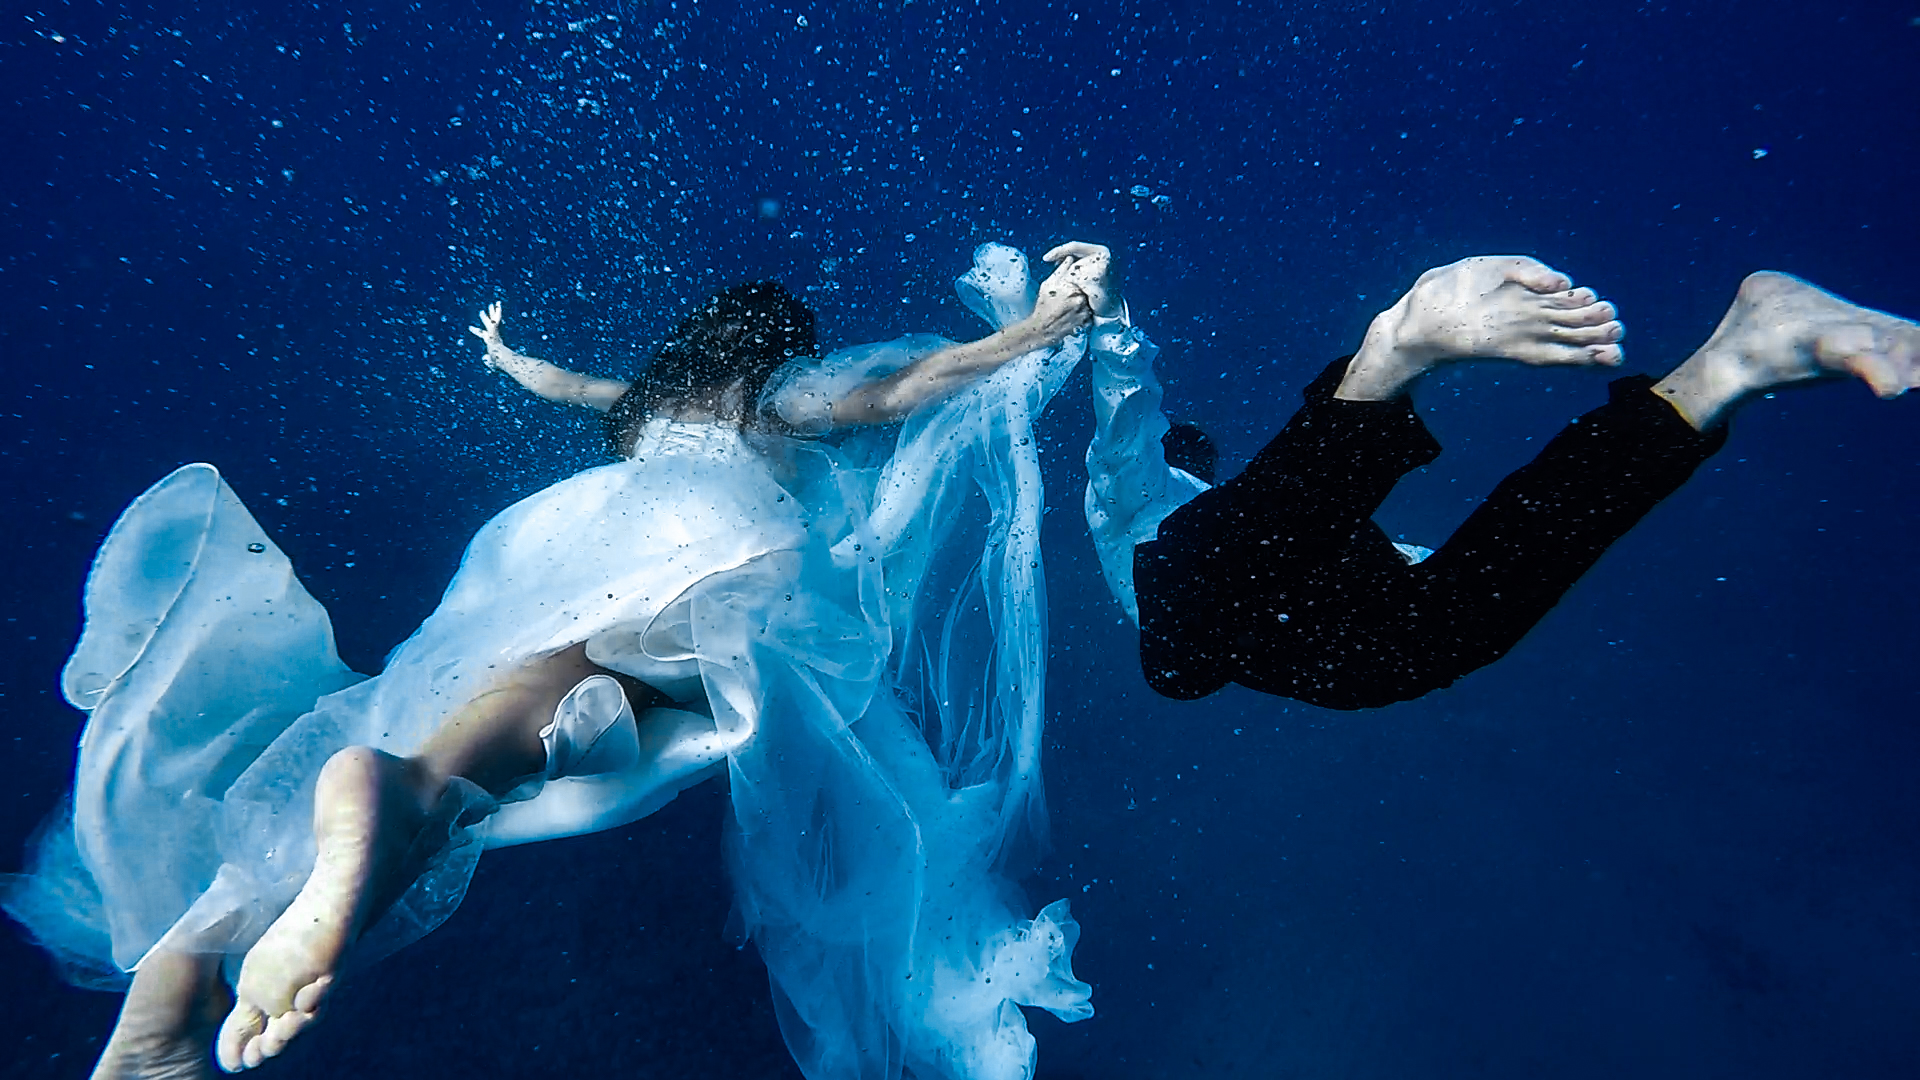 bride diving underwater in a wedding dress